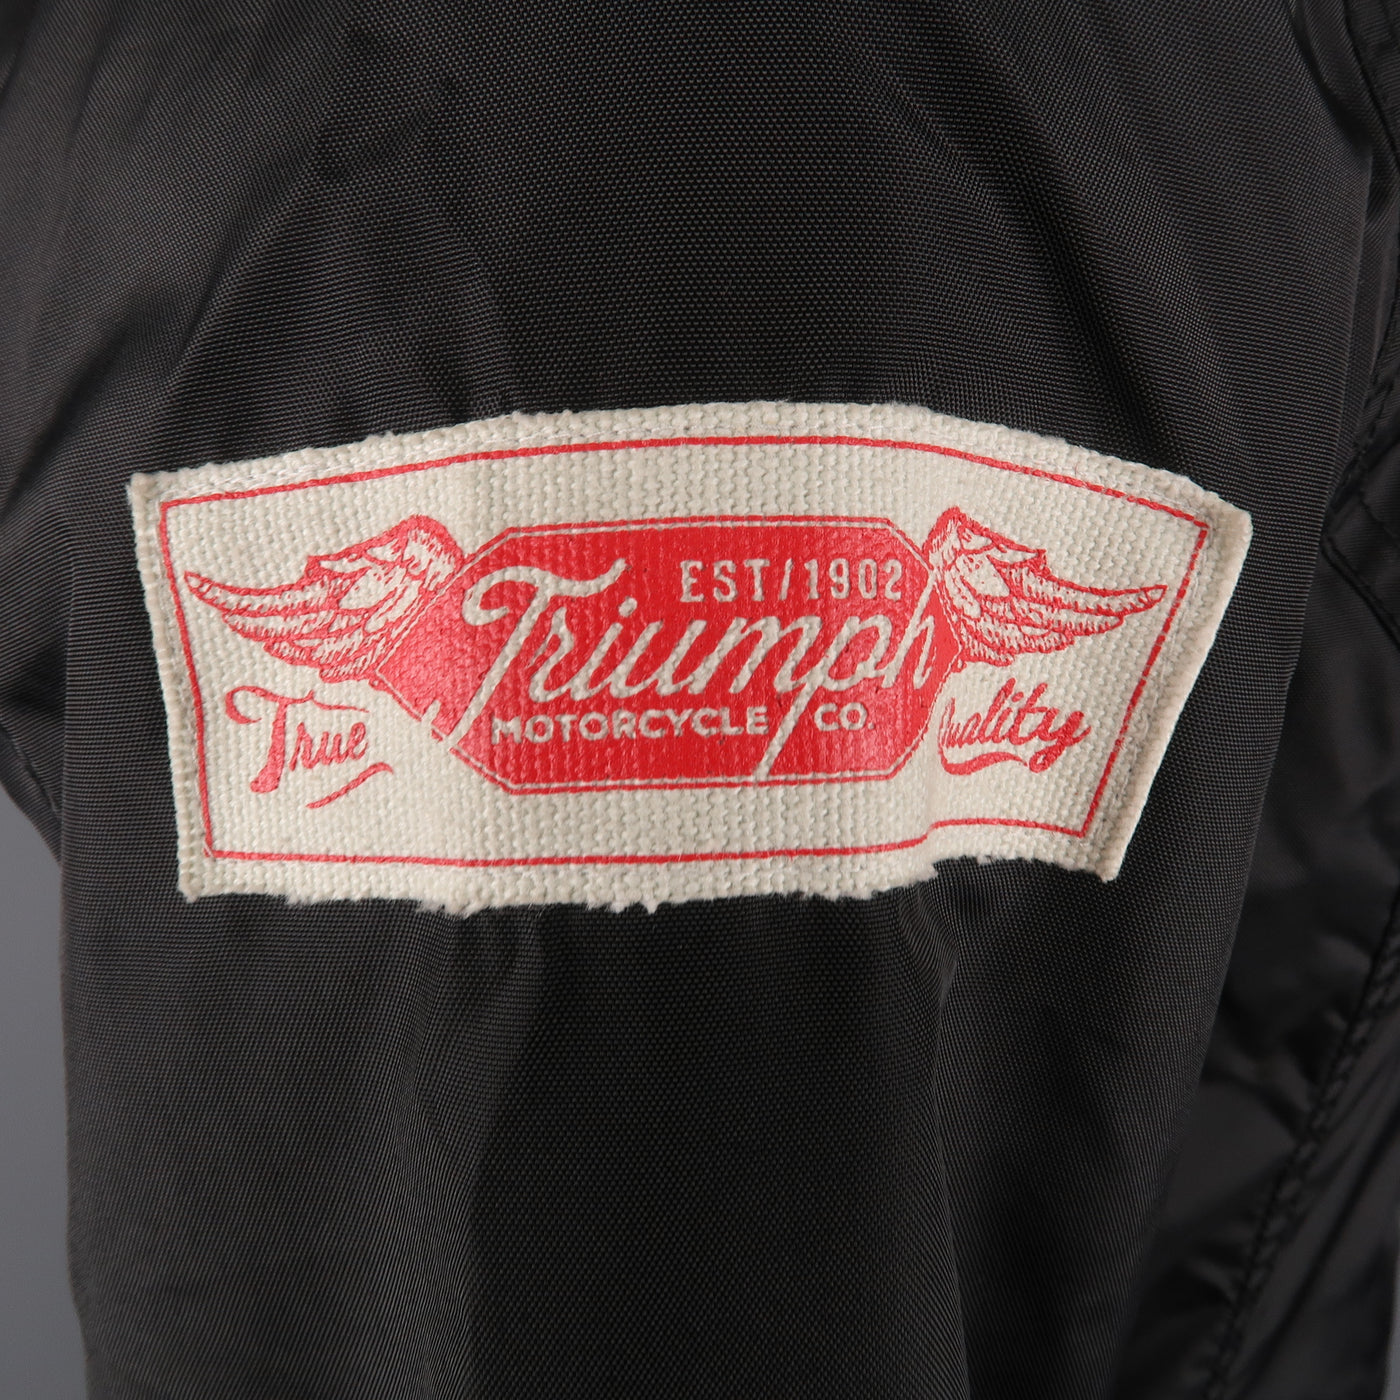 TRIUMPH L Black Nylon Motorcycle Jacket